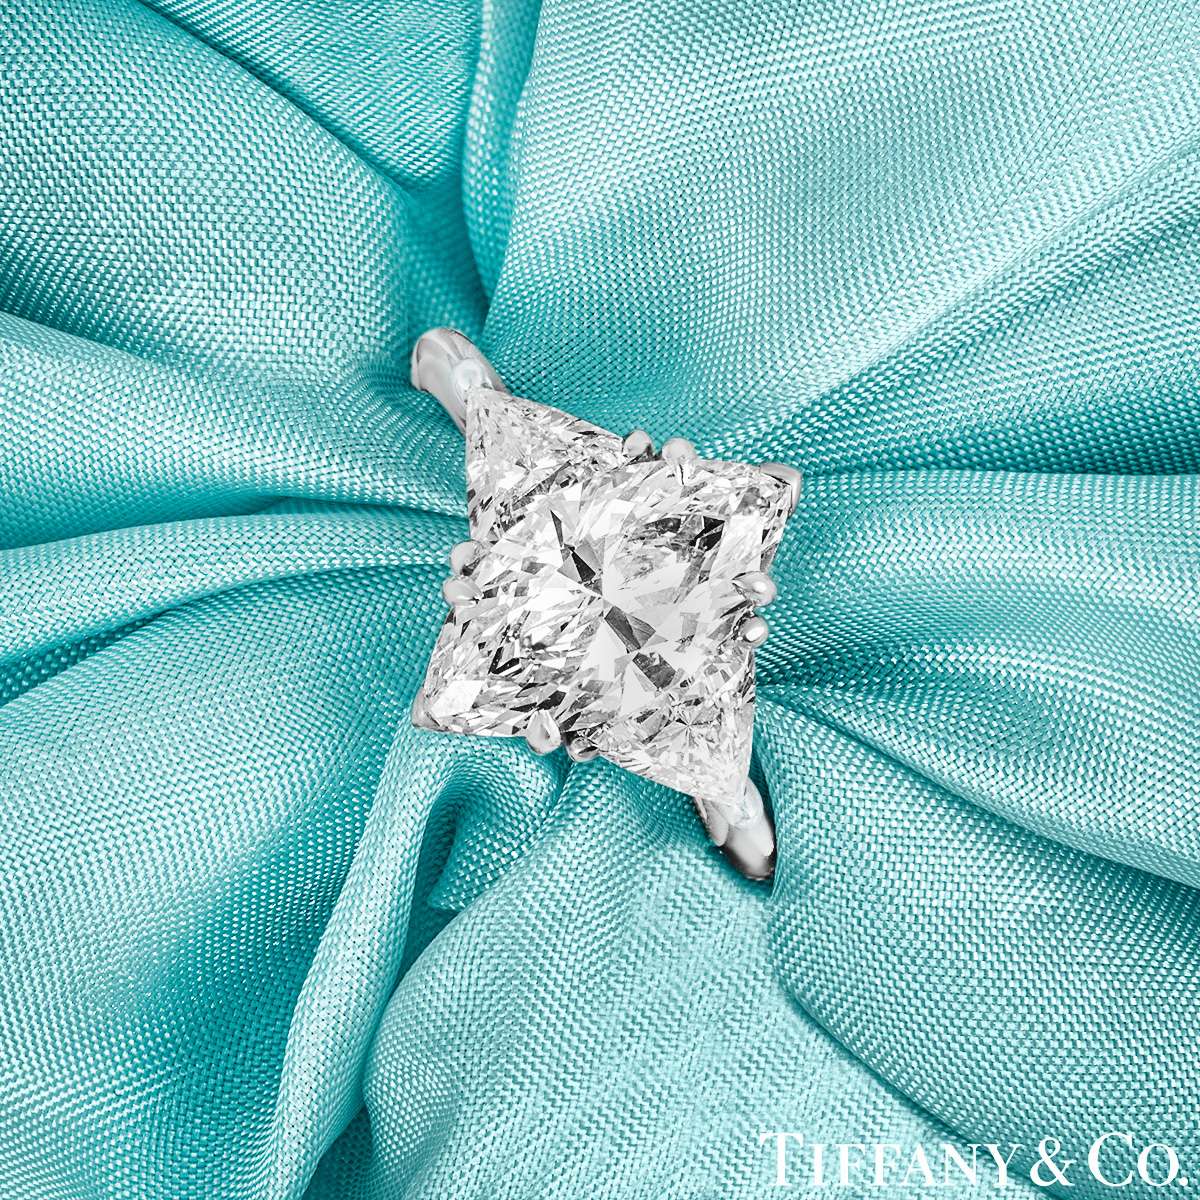 Tiffany & Co. Platinum Marquise Cut Diamond Ring 2.38ct D/IF